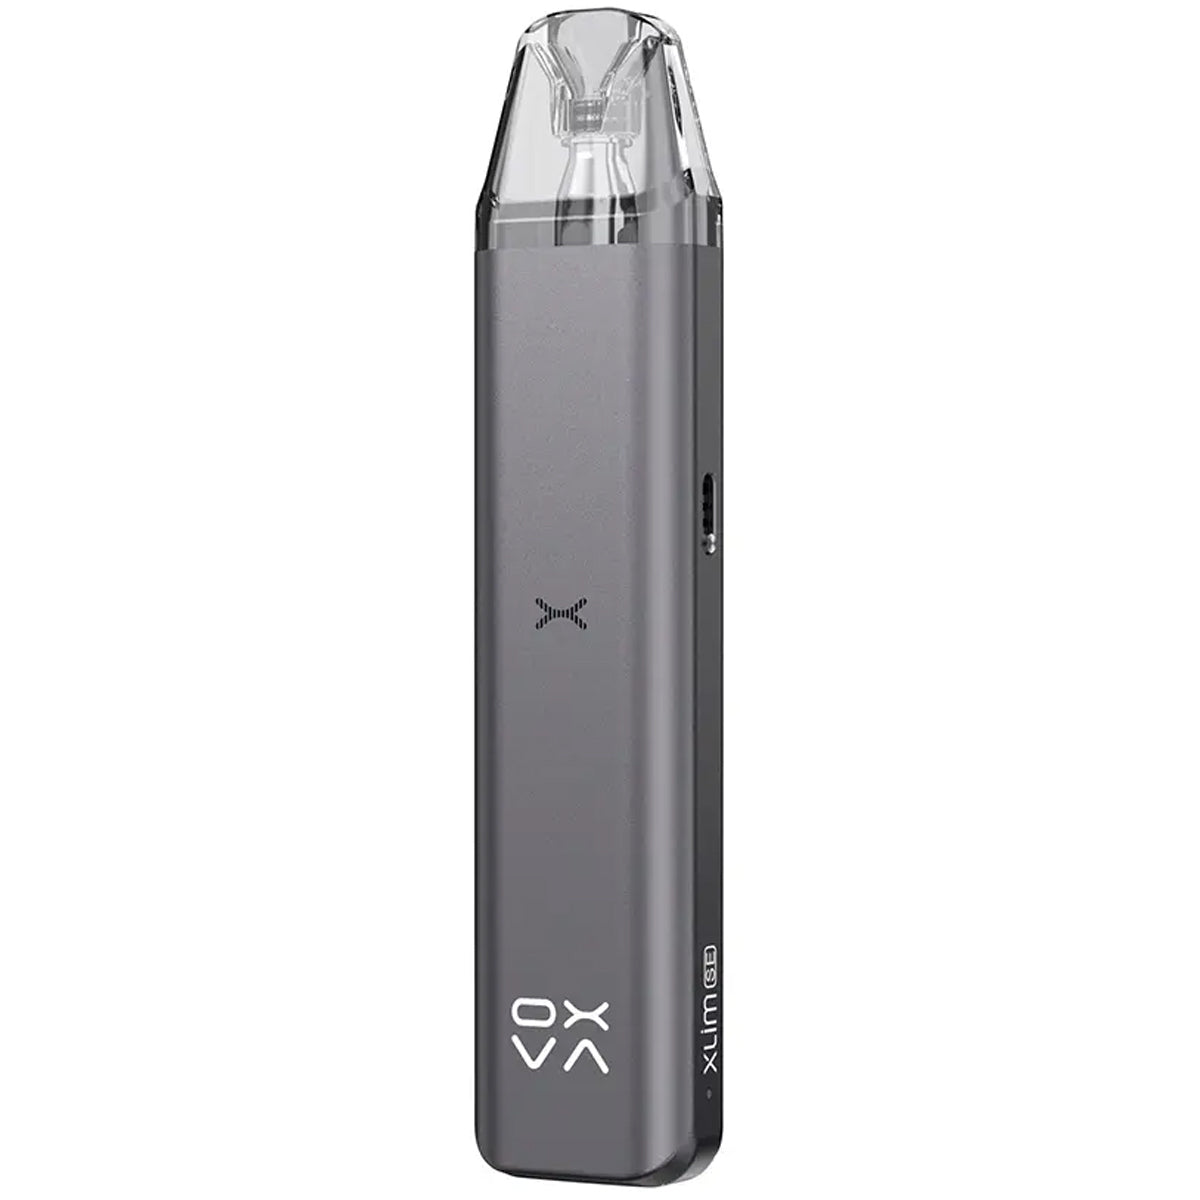 Oxva Xlim SE Classic Edition Kit